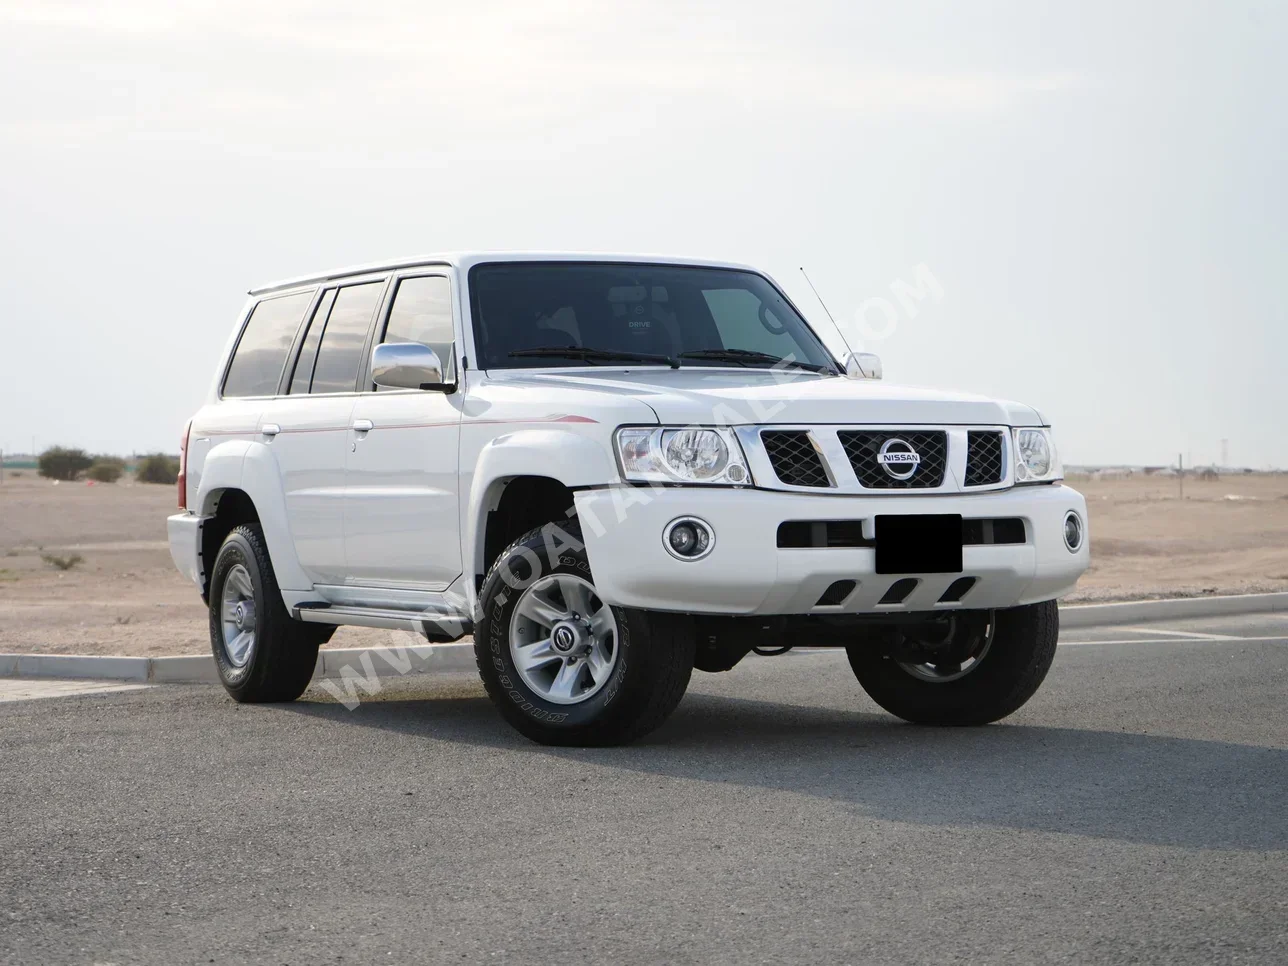 Nissan  Patrol  Safari  2022  Manual  16,000 Km  6 Cylinder  Four Wheel Drive (4WD)  SUV  White  With Warranty